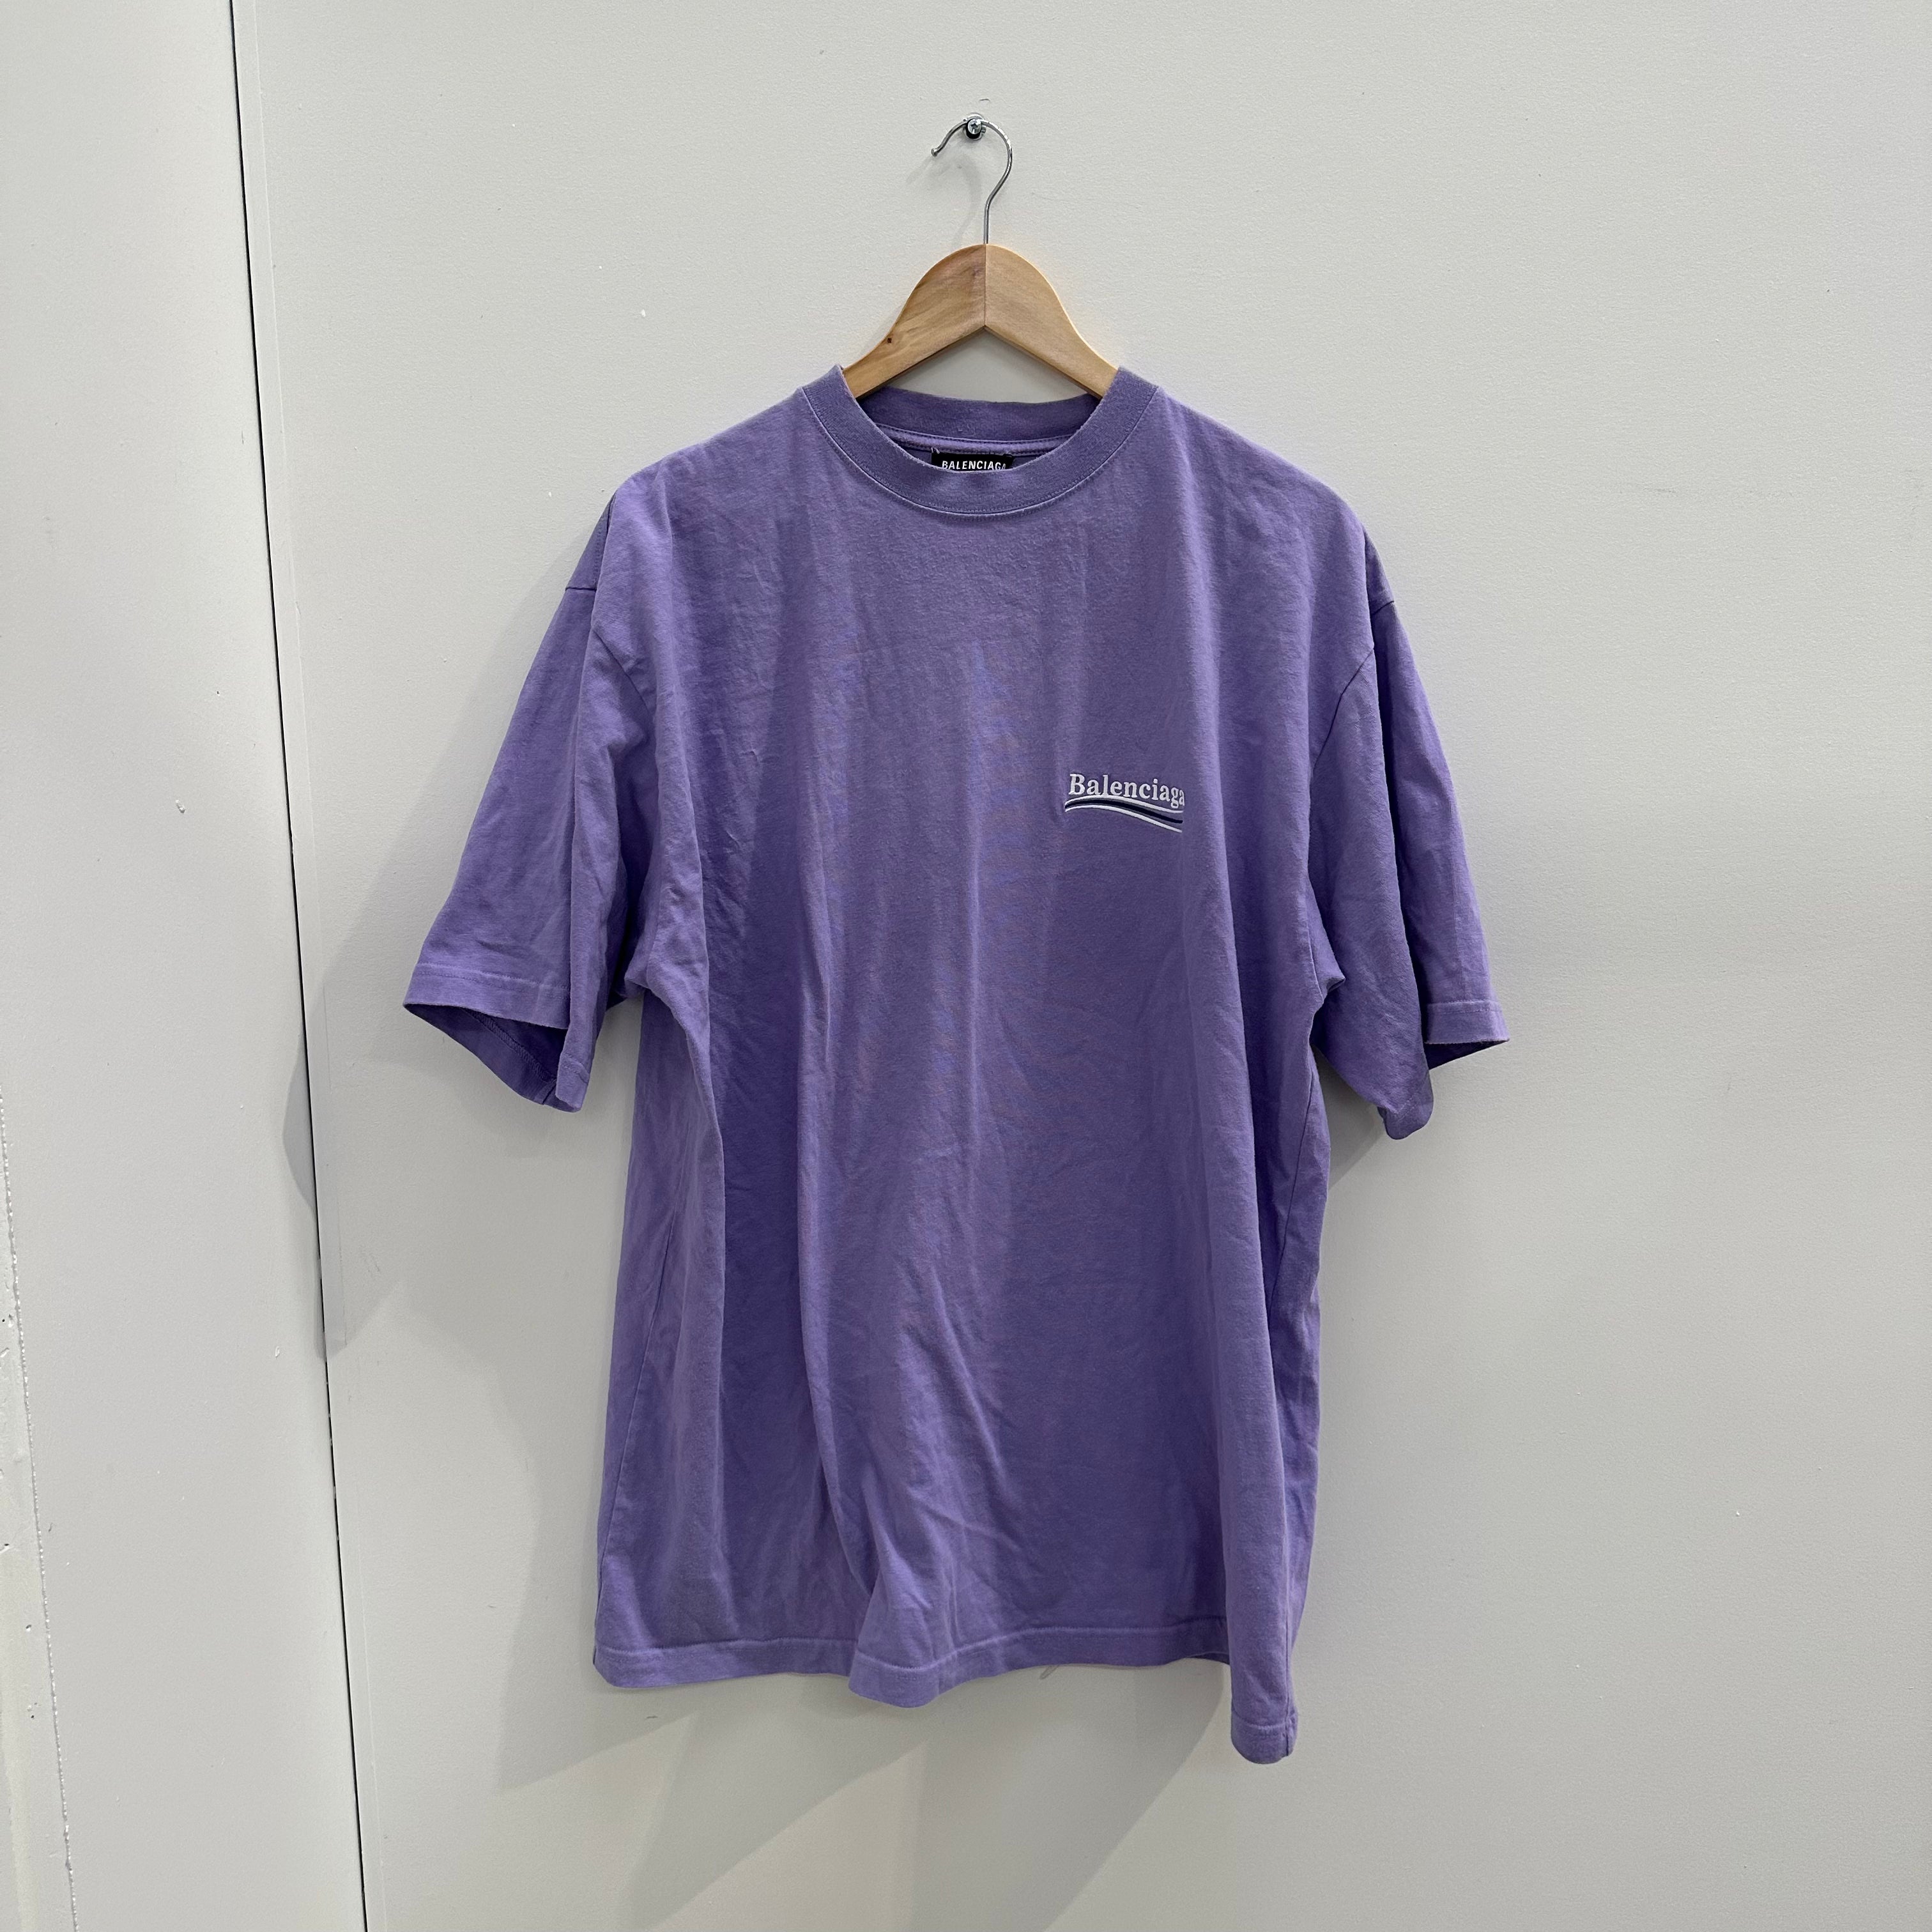 Balenciaga Purple Campaign Tee (fits L, true to size)